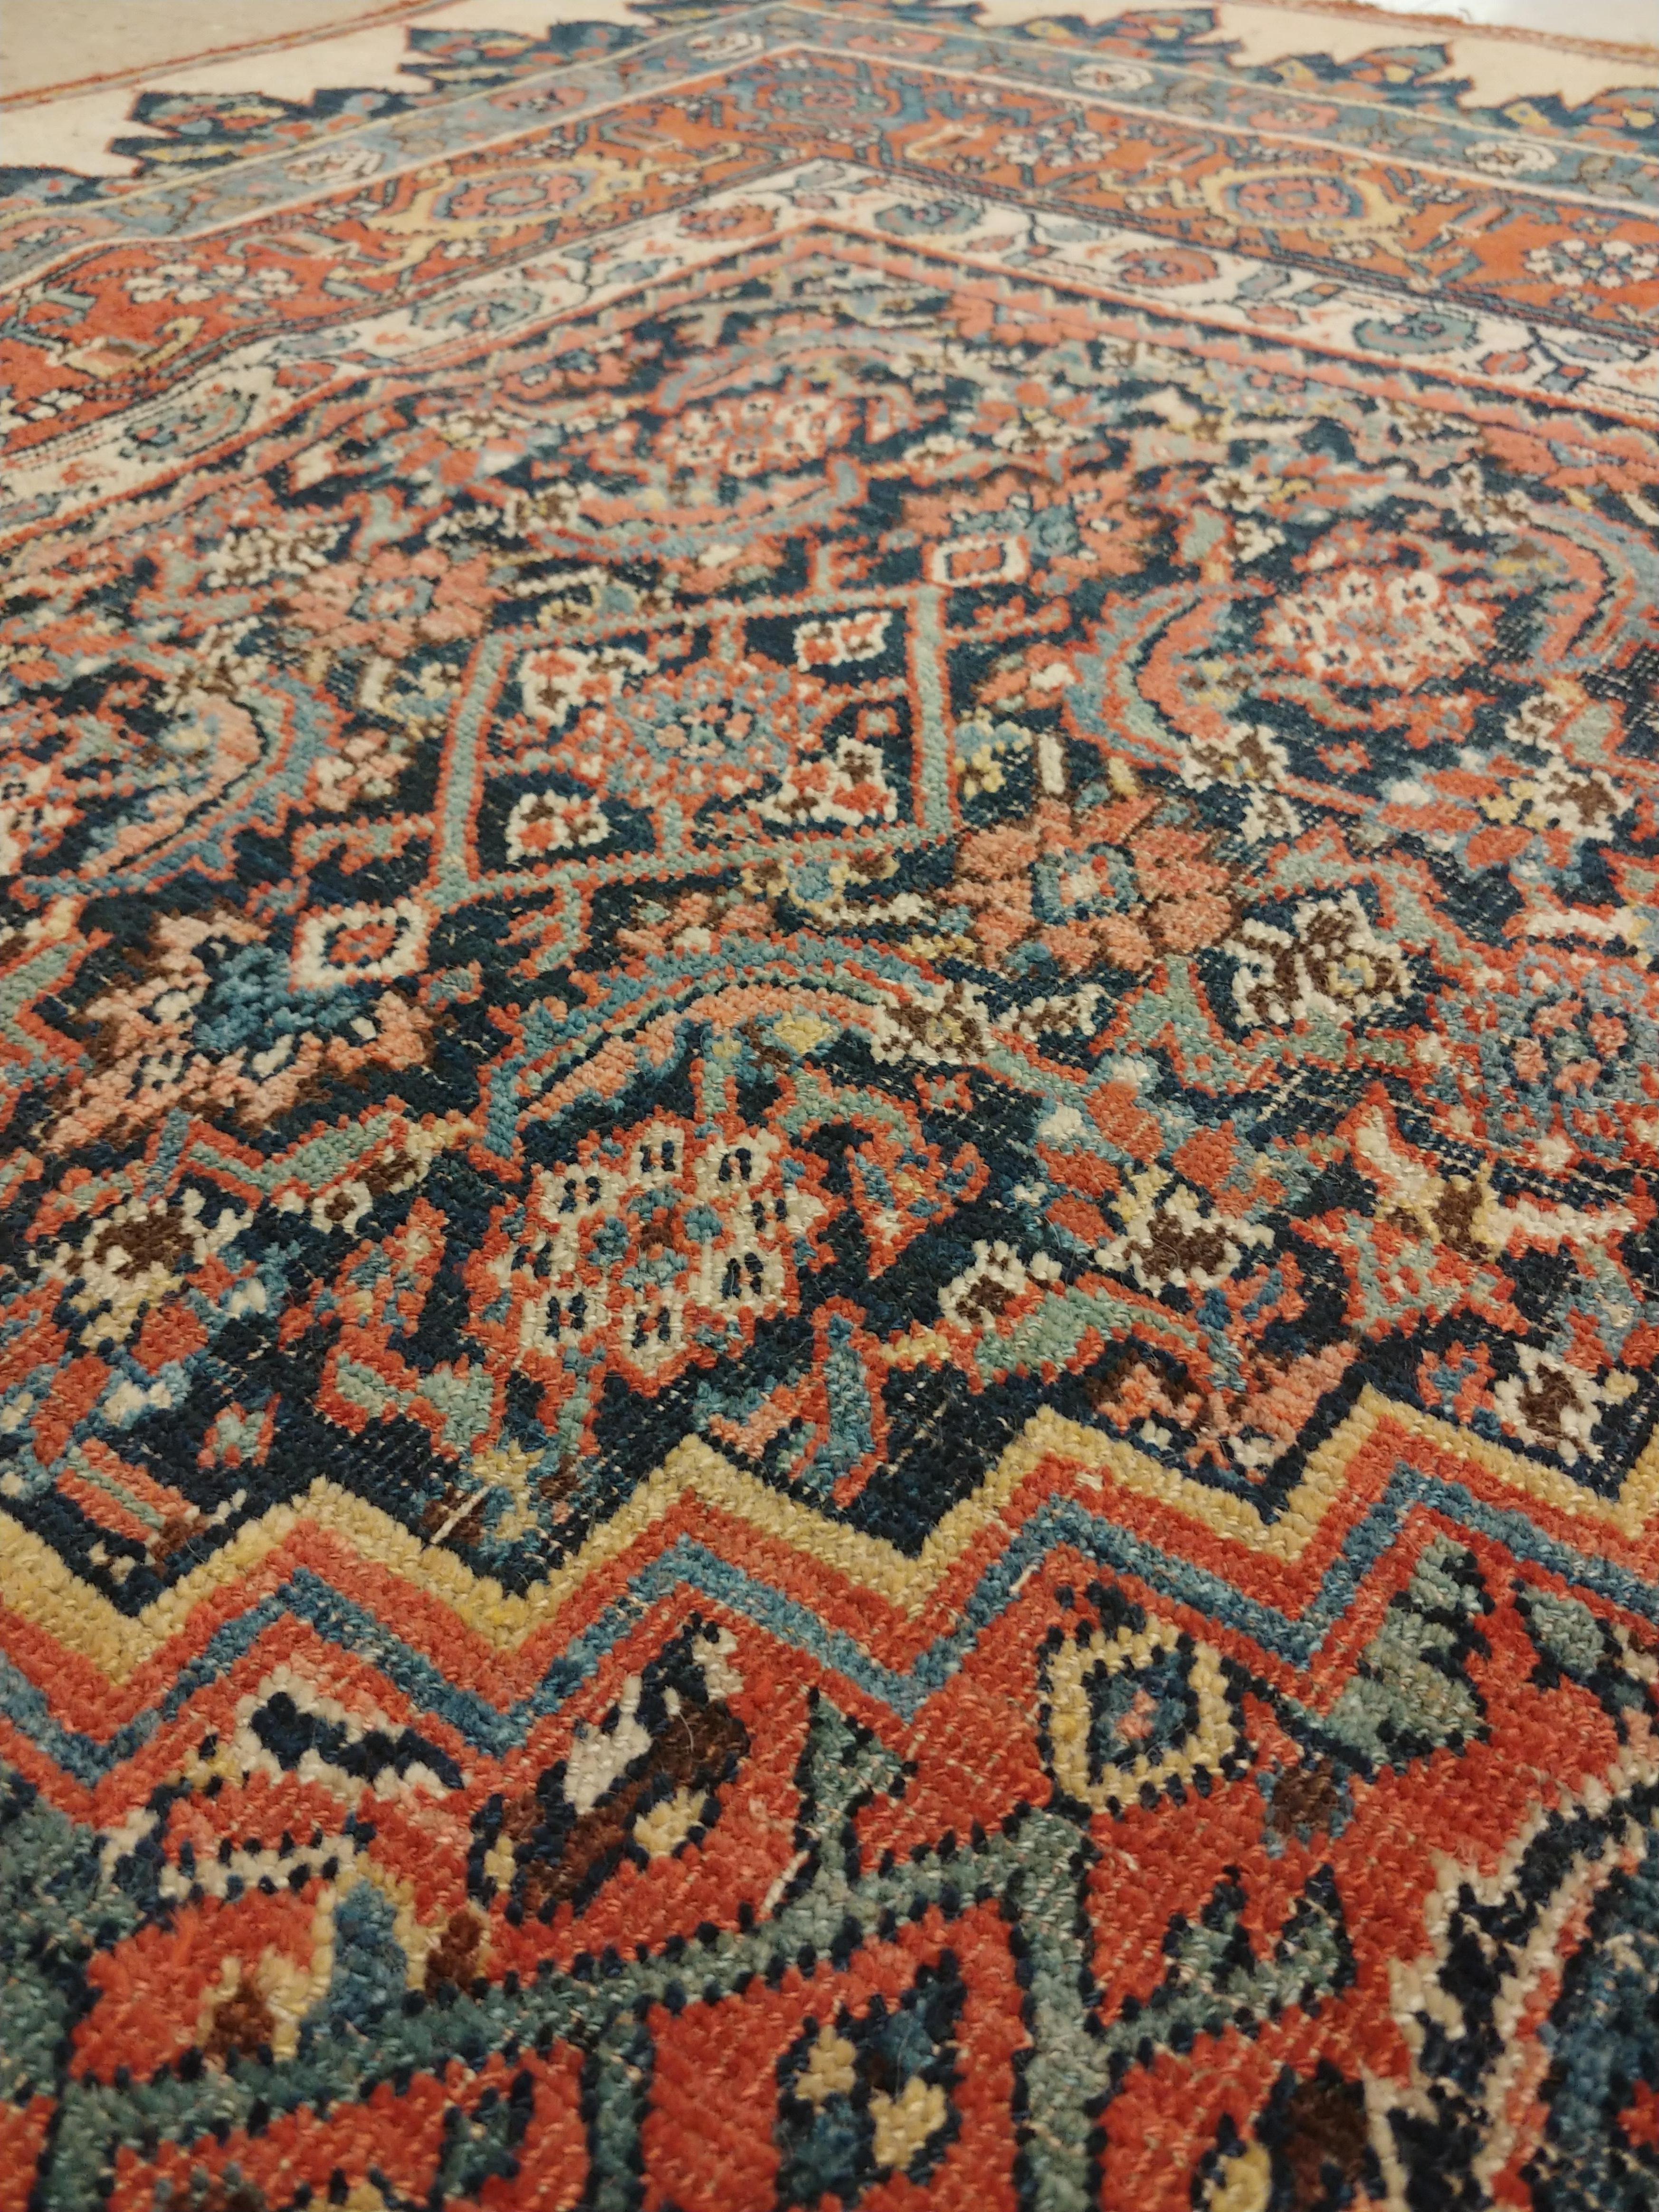 Antique Bijar Carpet Oriental Rug, Handmade, Ivory, Rust, Light Blue, Terracotta For Sale 2